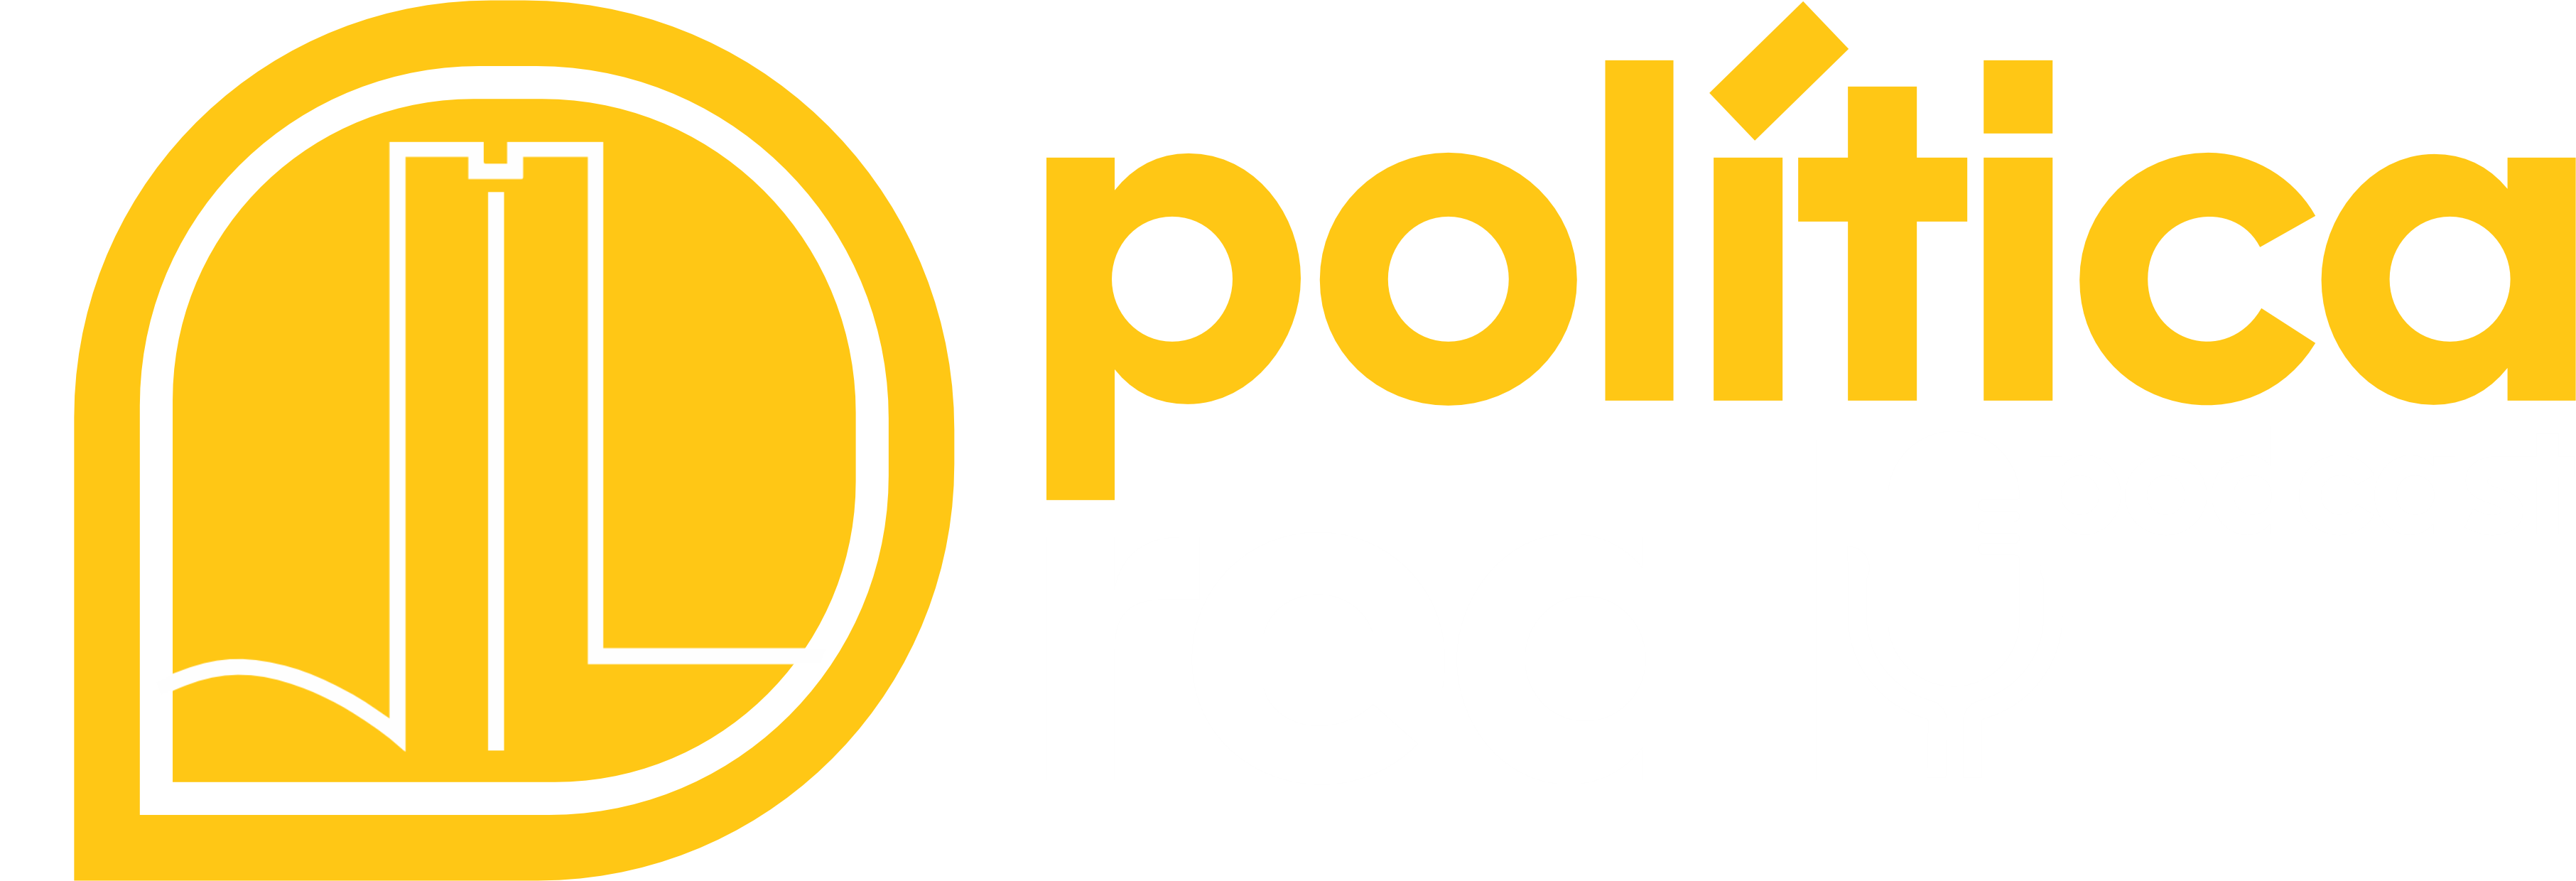 Política Real Podcast